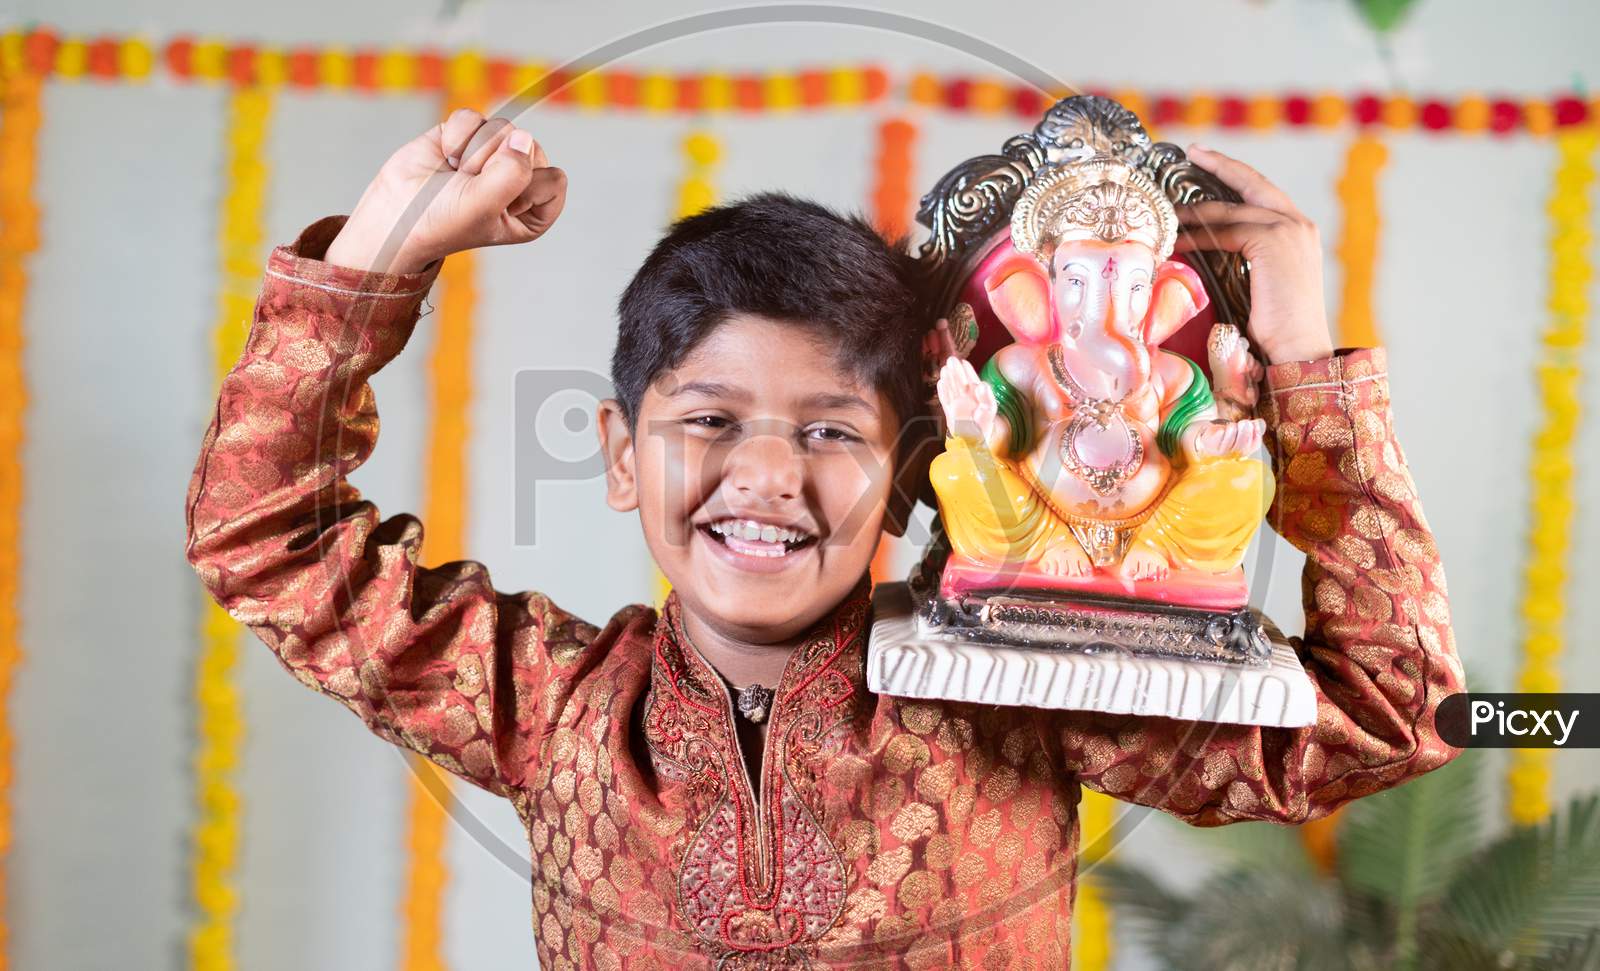 Happy Smiling Kid With Ganesha Idol On Shoulder Saying Or Chanting Ganapati Bappa Morya During Festival Celebrations